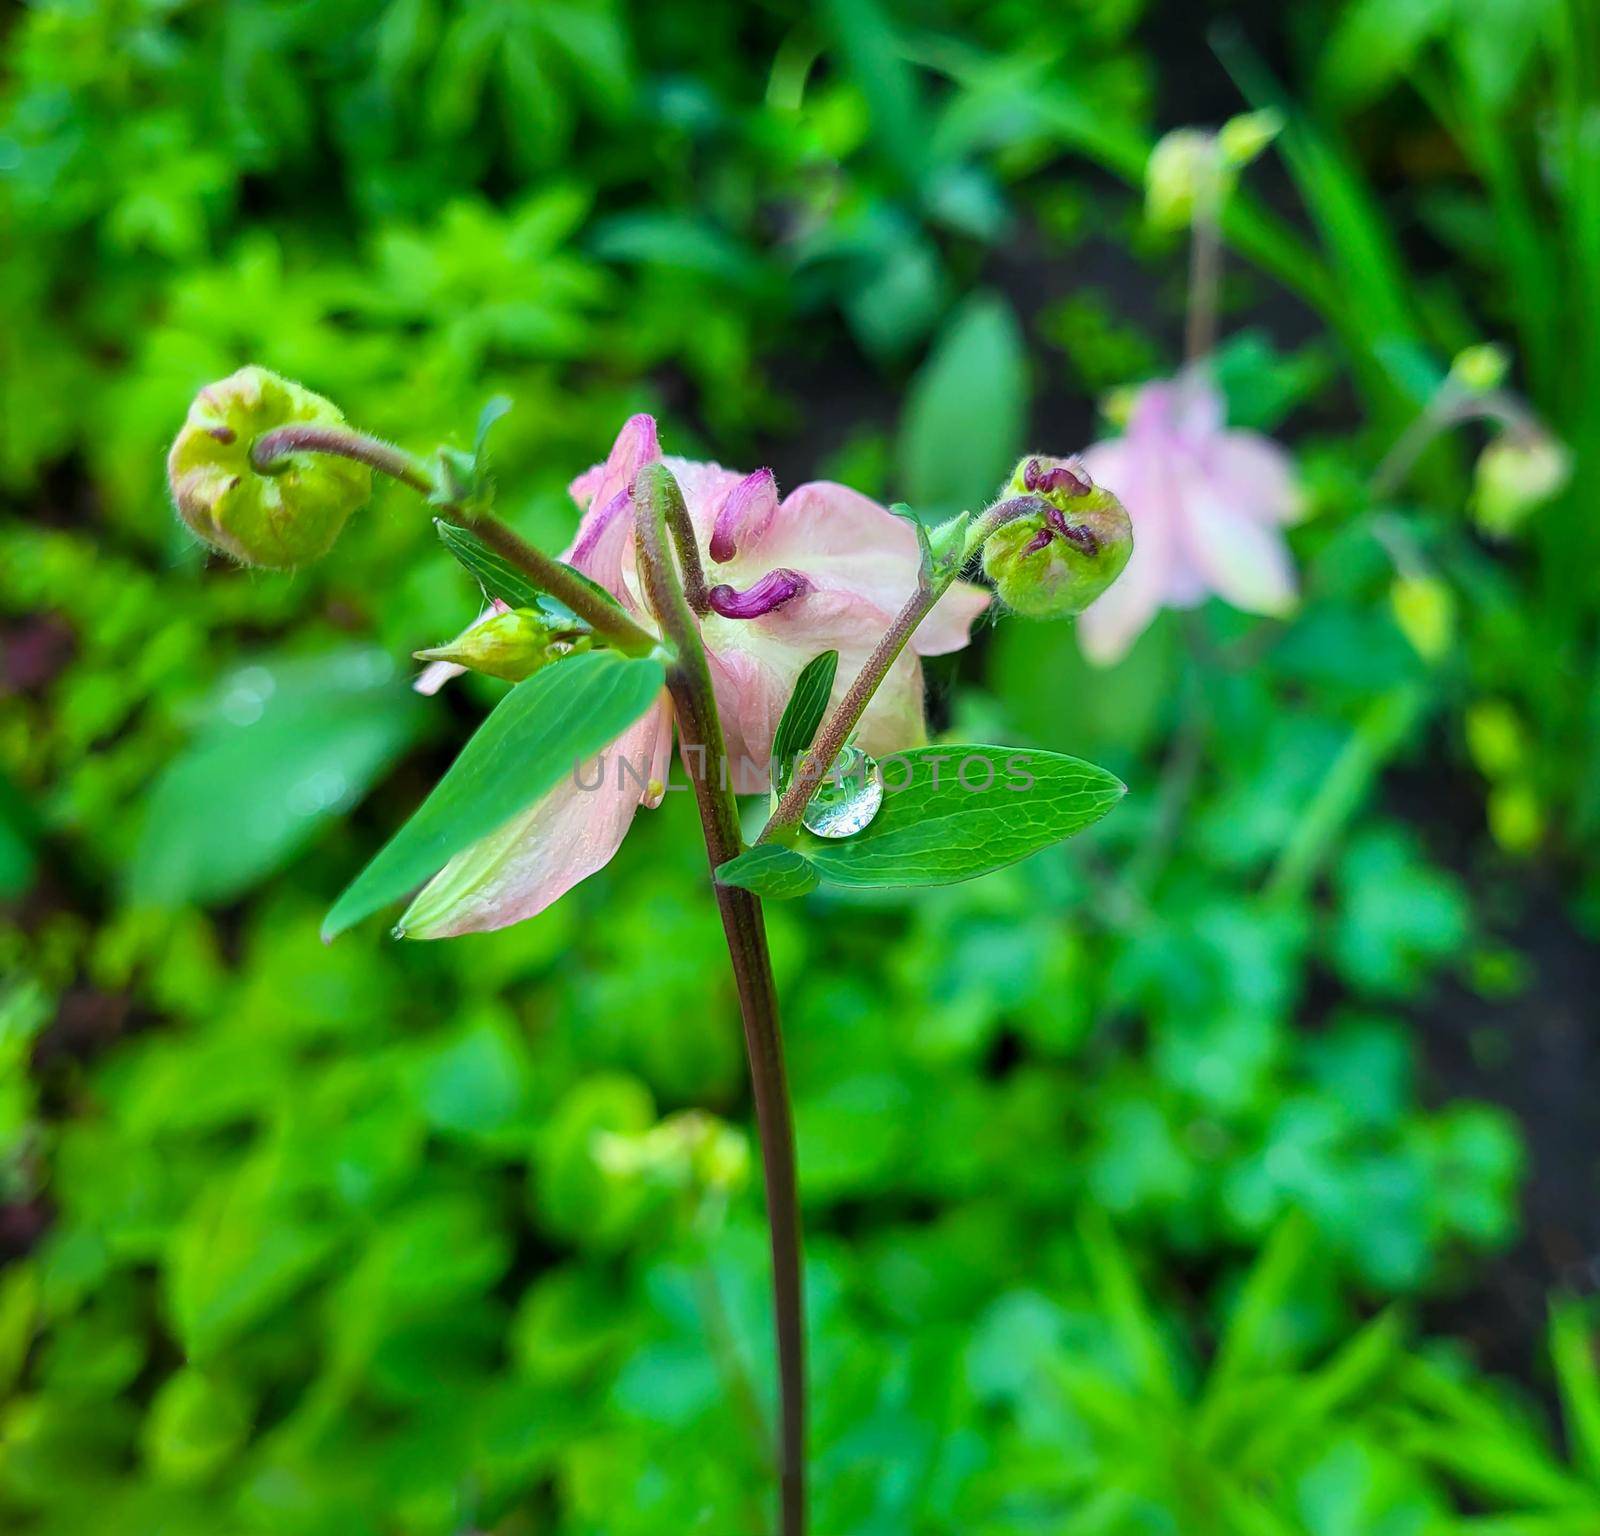 A big drop of rain is lying on a pink flower in a summer garden by lapushka62